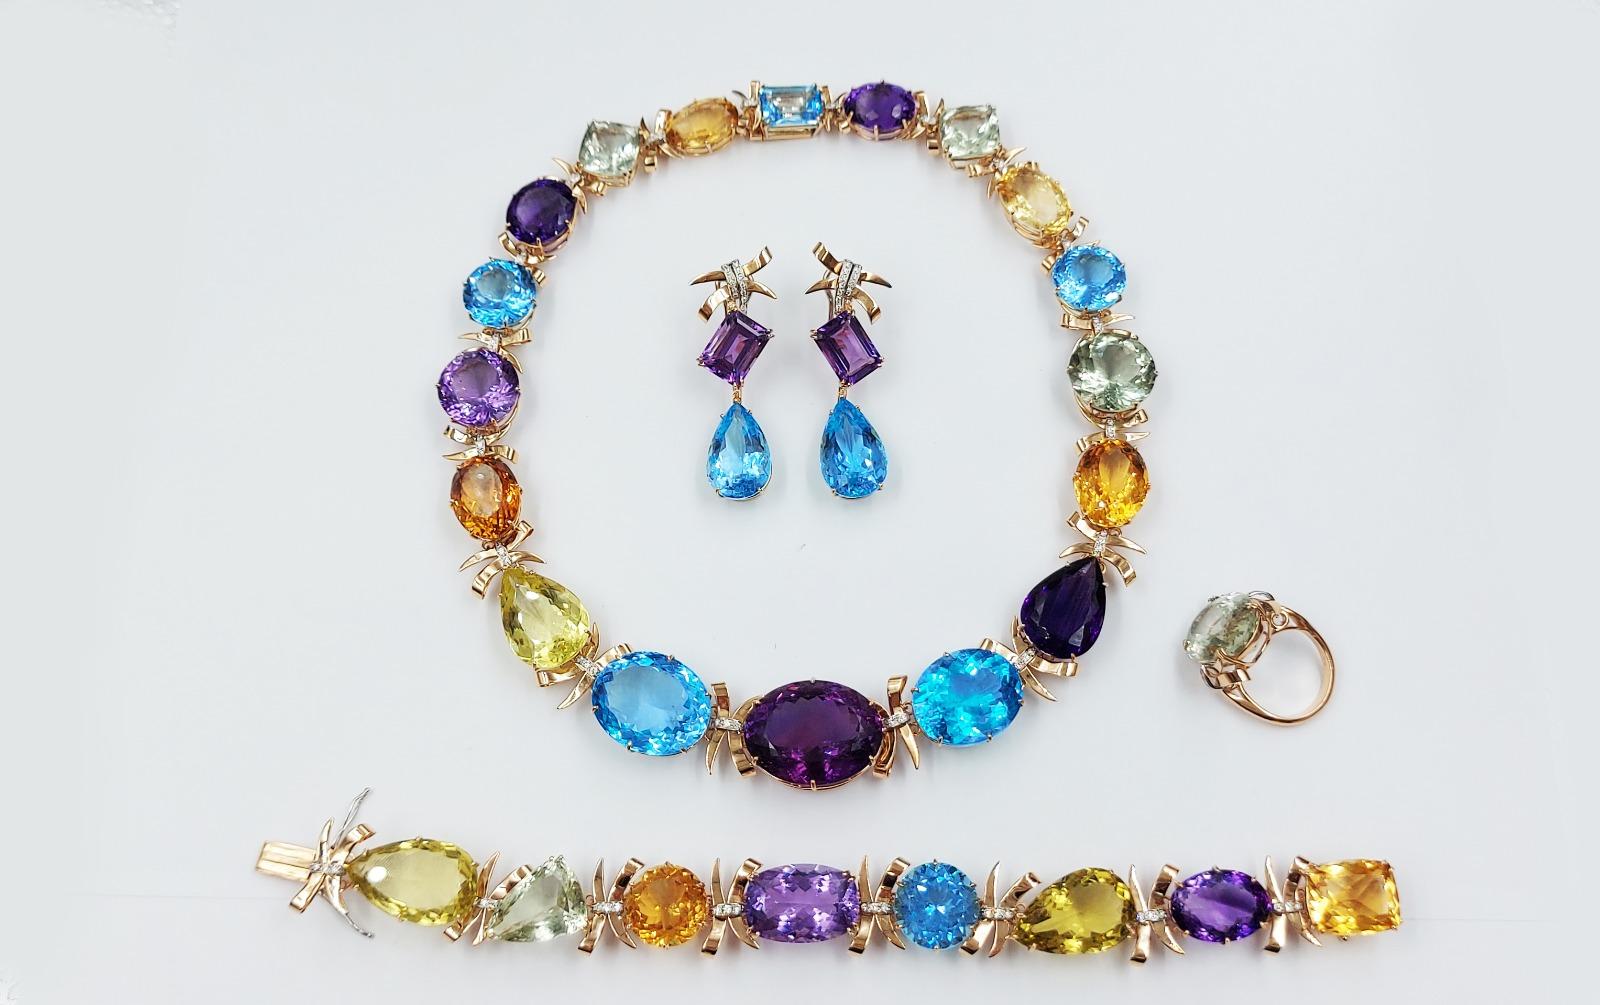 Italian brilliant cut diamond (0.25 carats), amethyst (15.36 carats), blue topaz (41,61 carats), 18 carats (12,9 grams) yellow gold drop earrings. Part of a set (necklace, ring and bracelet).